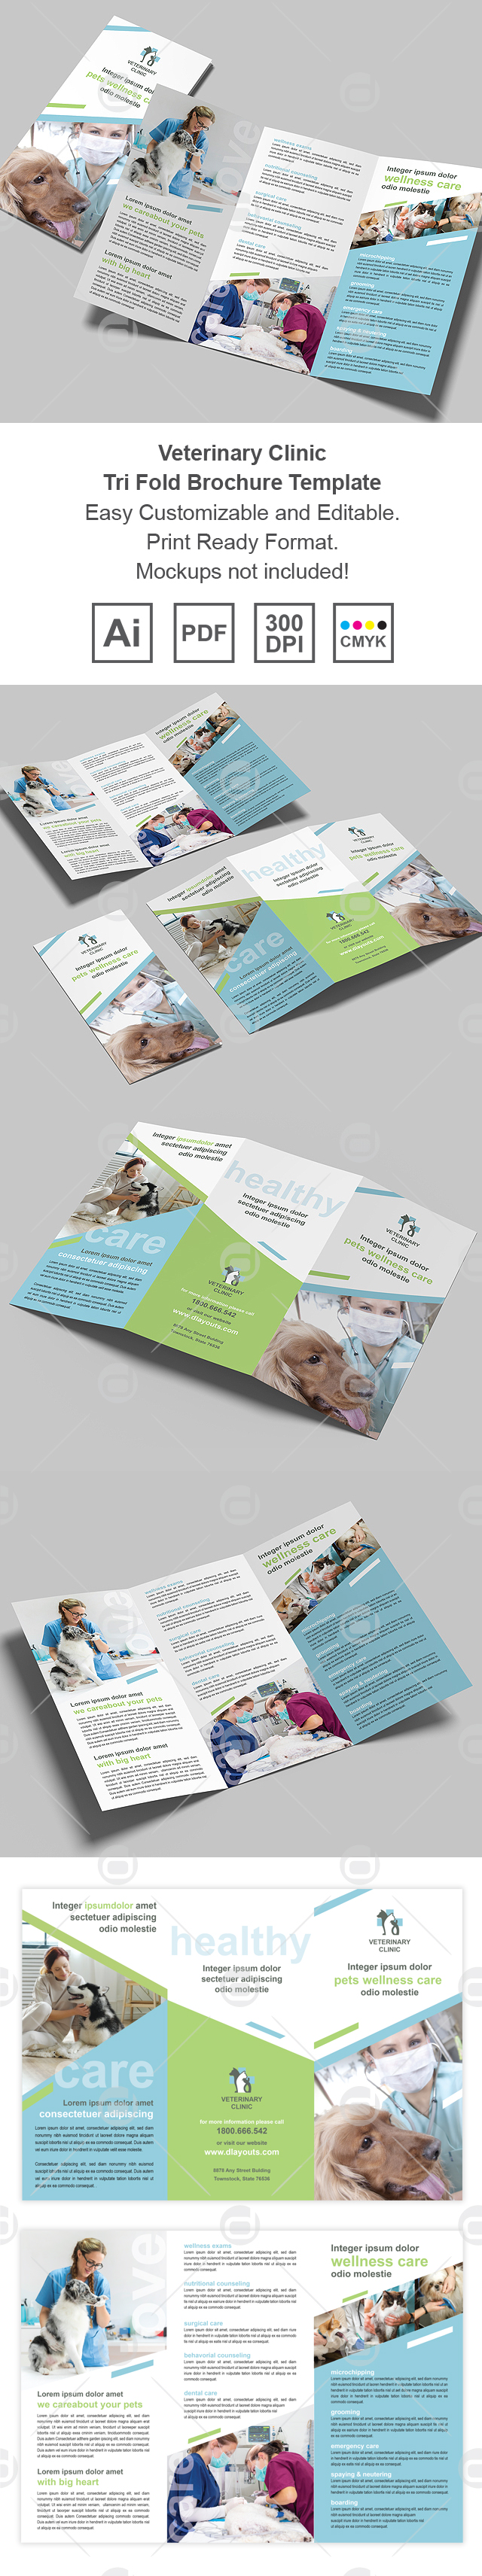 Veterinary Clinic Tri Fold Brochure Template